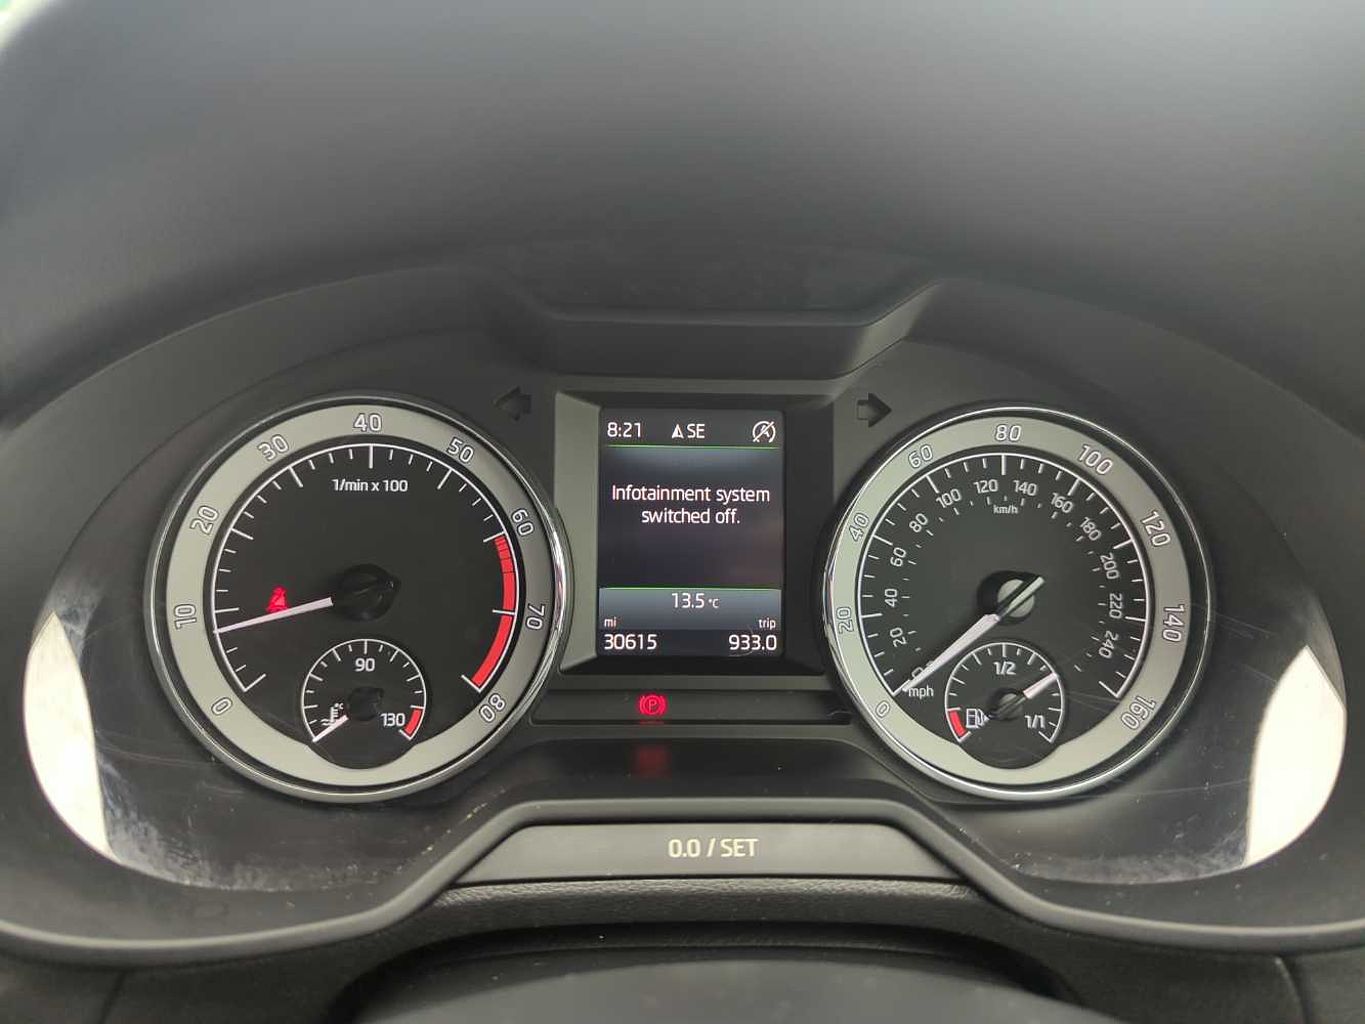 SKODA Octavia Hatchback (2017) 1.4 TSI SE L (150PS)